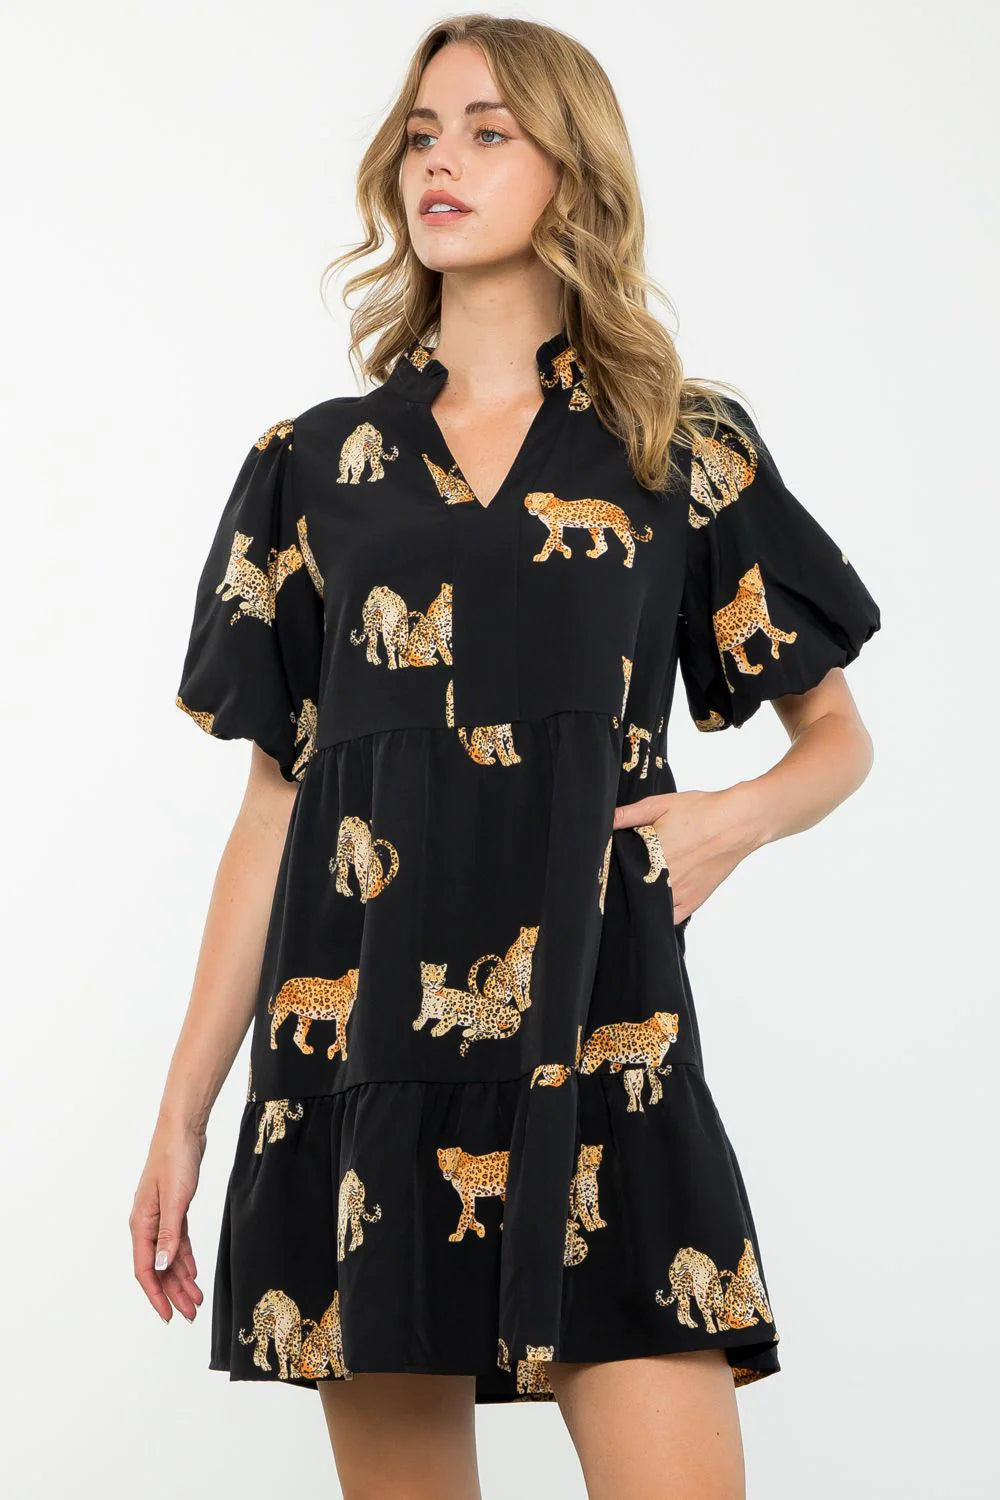 Kelly Cheetah Print Dress